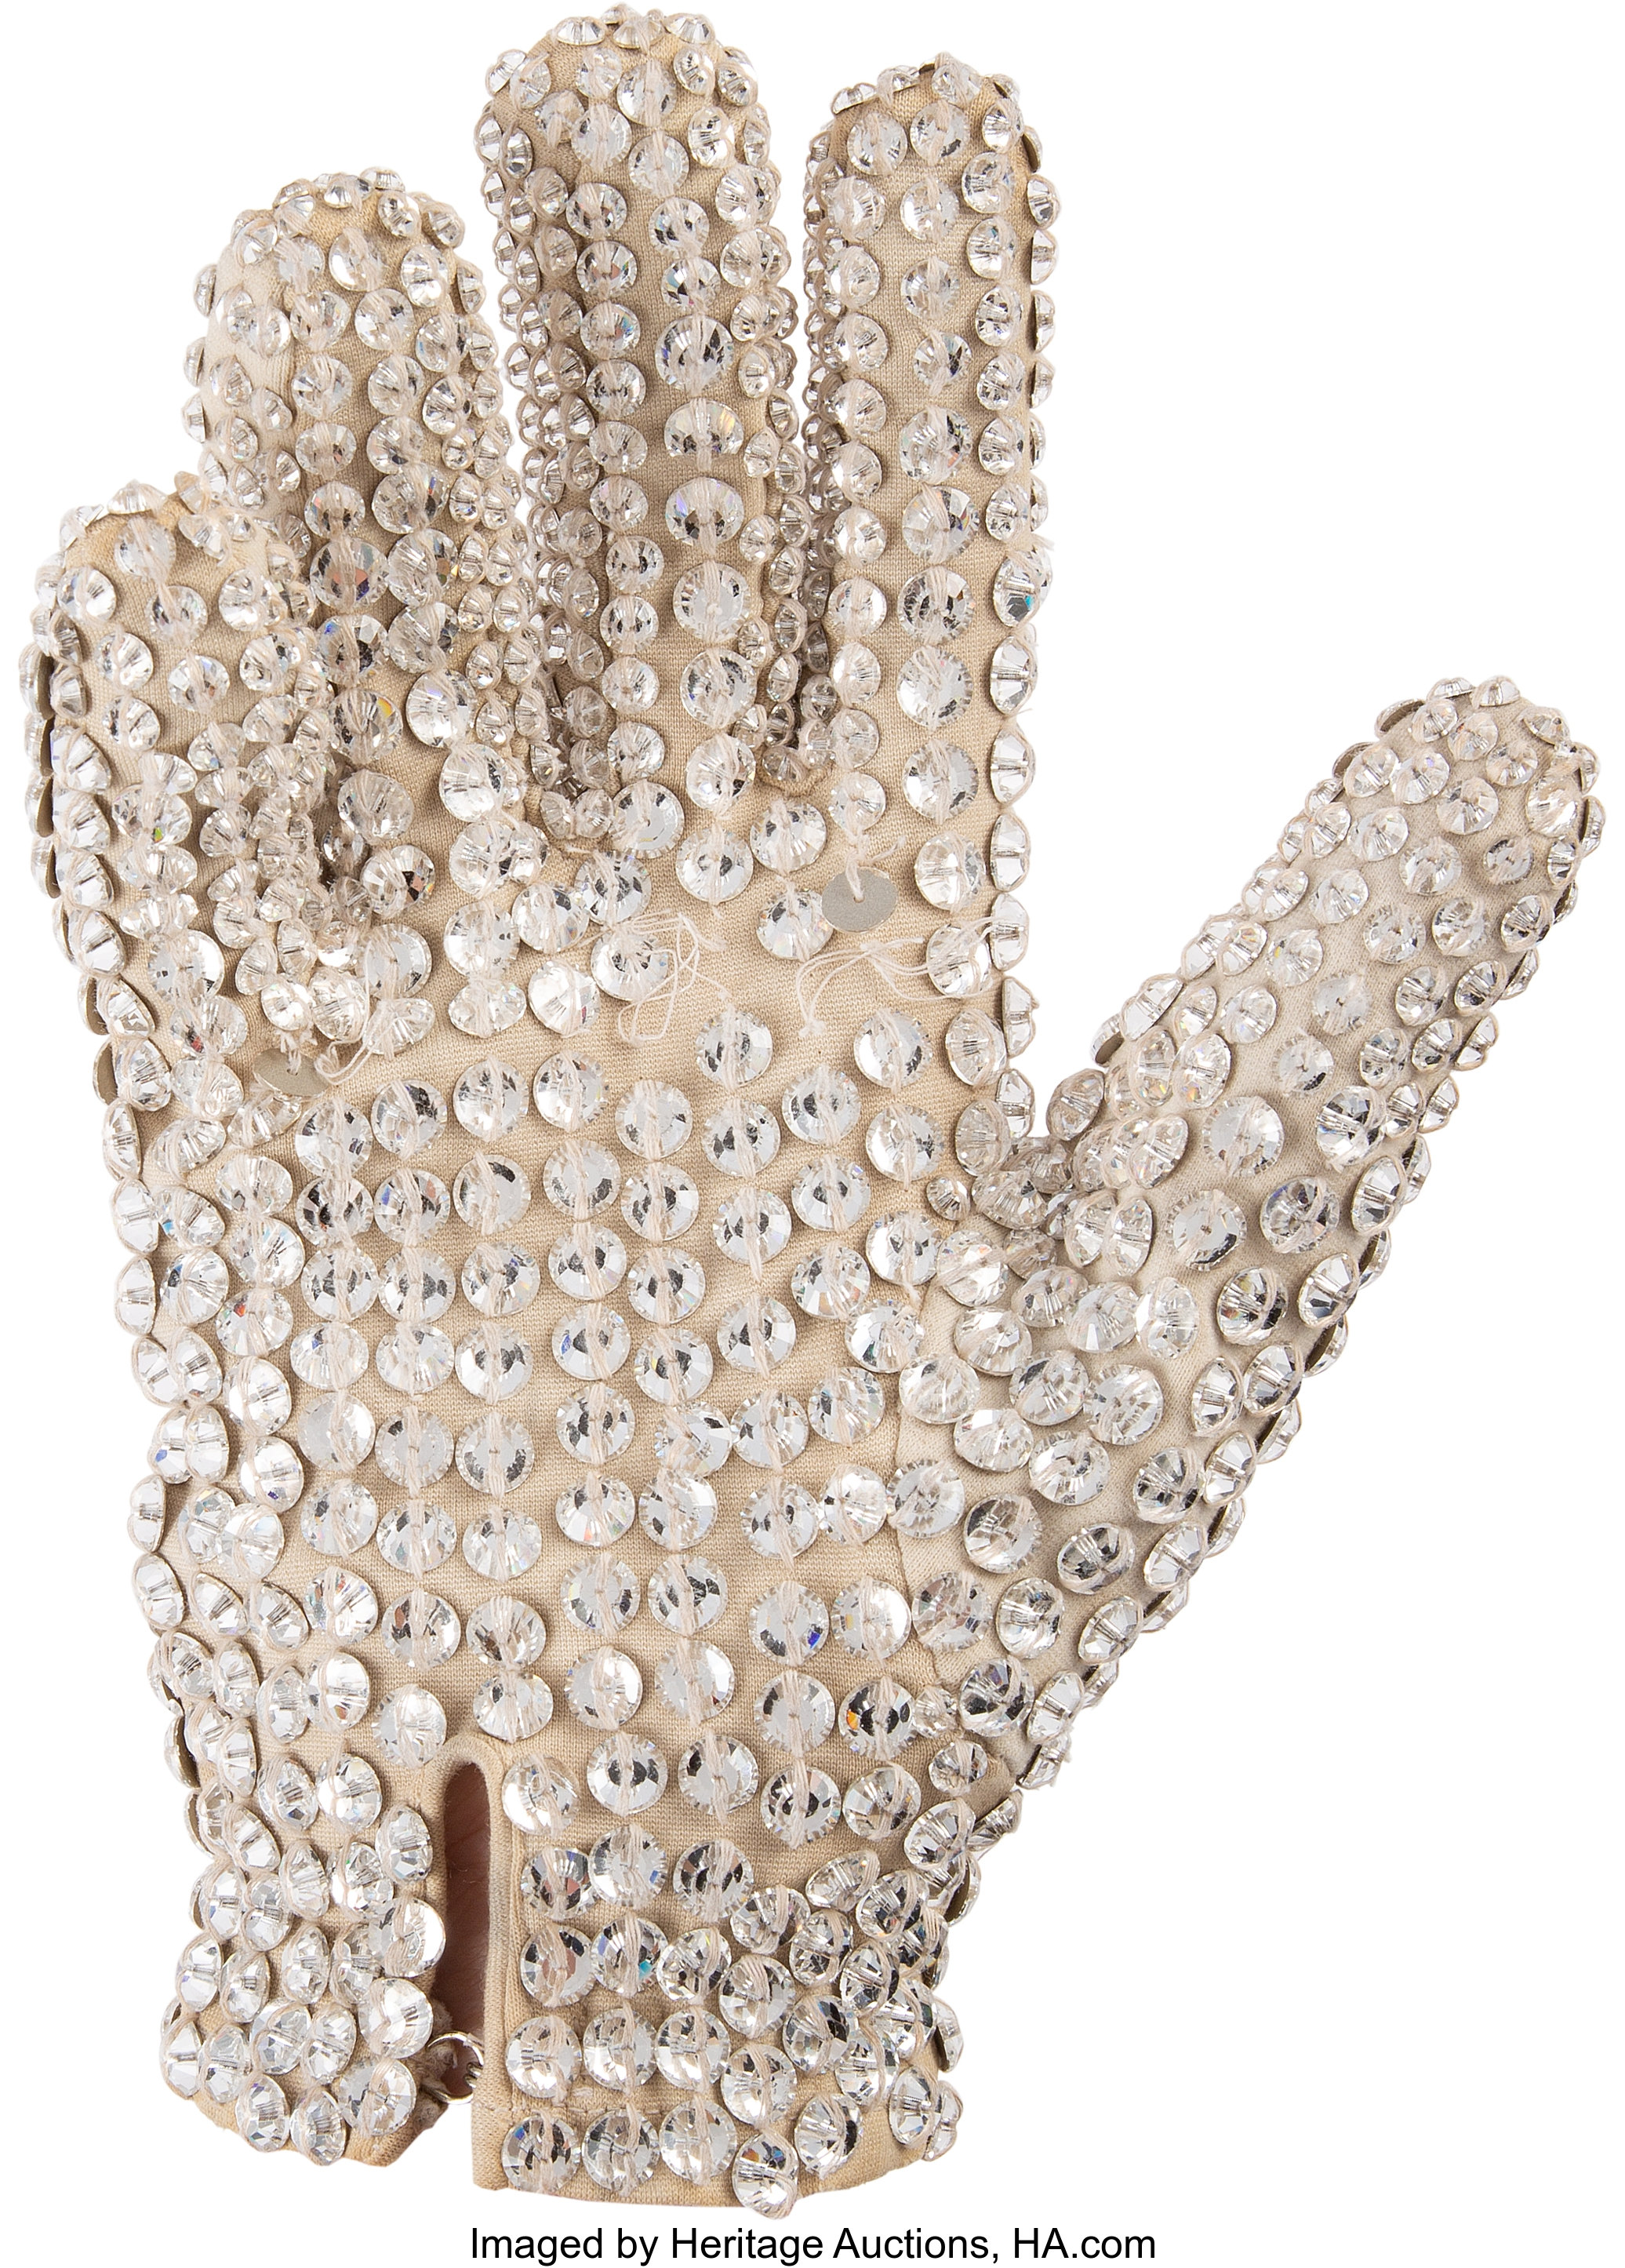 Sold at Auction: Michael Jackson's Custom Made Bill Whitten Glove